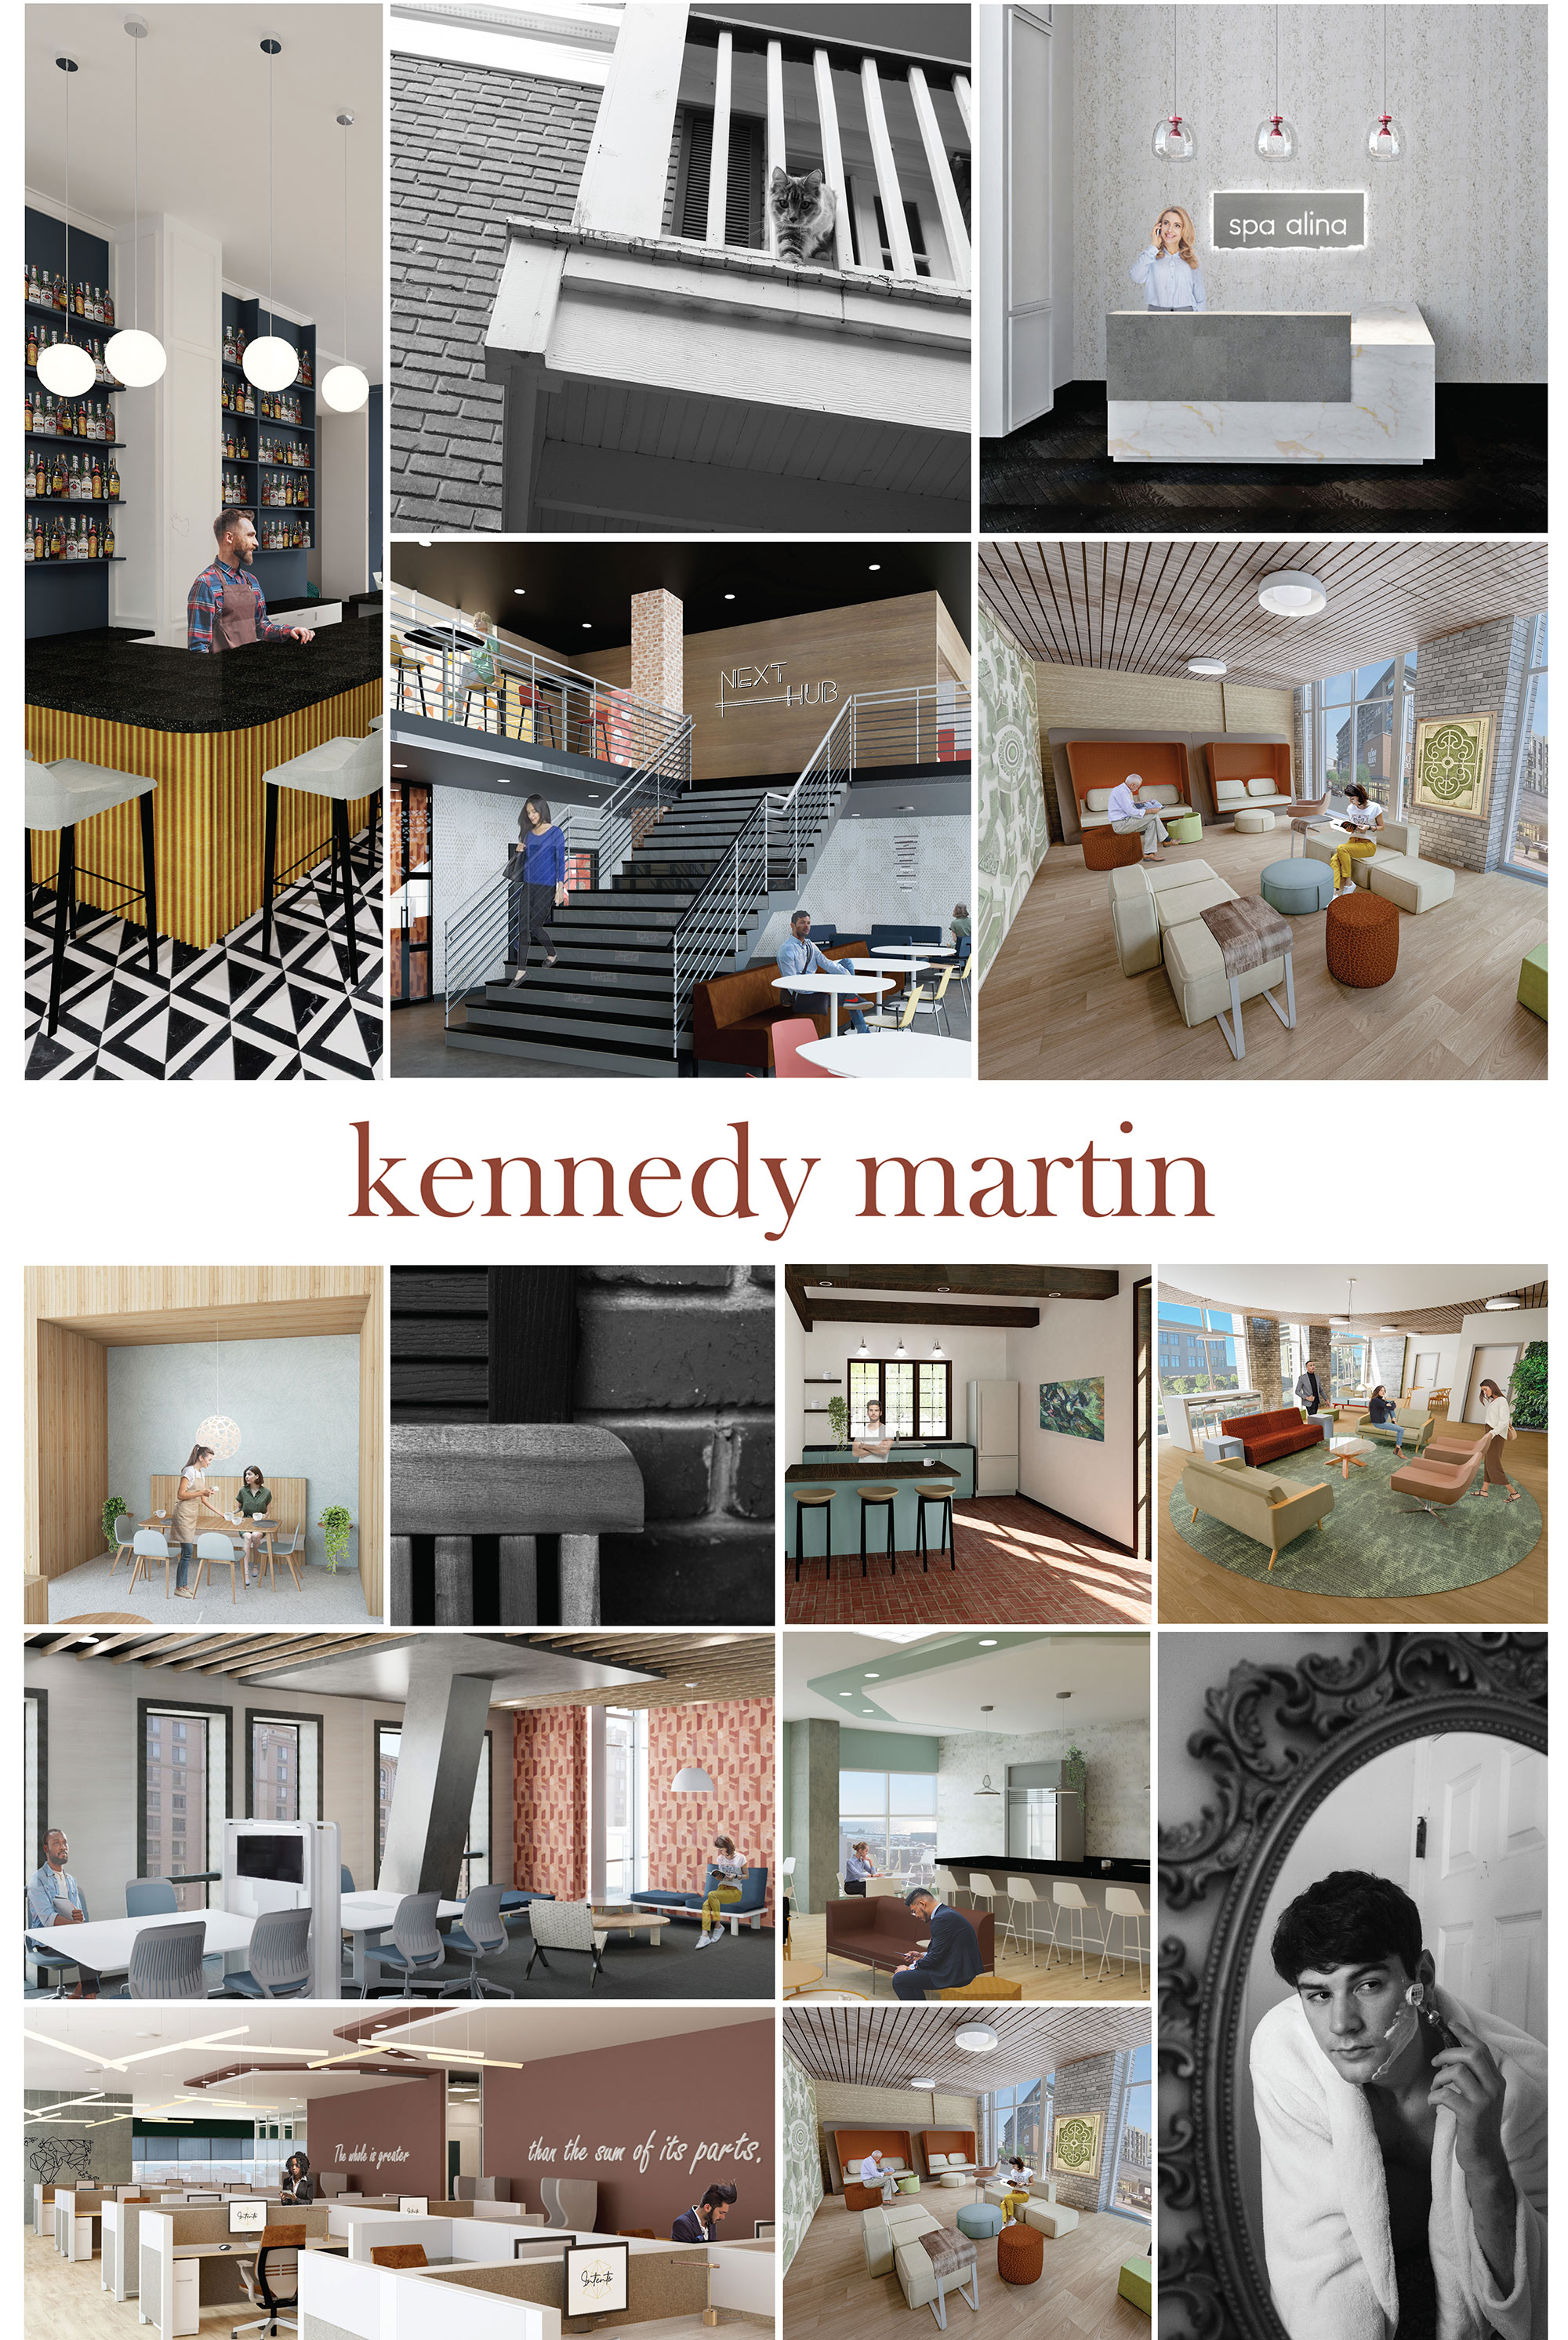 Kennedy Martin's senior exhibit board